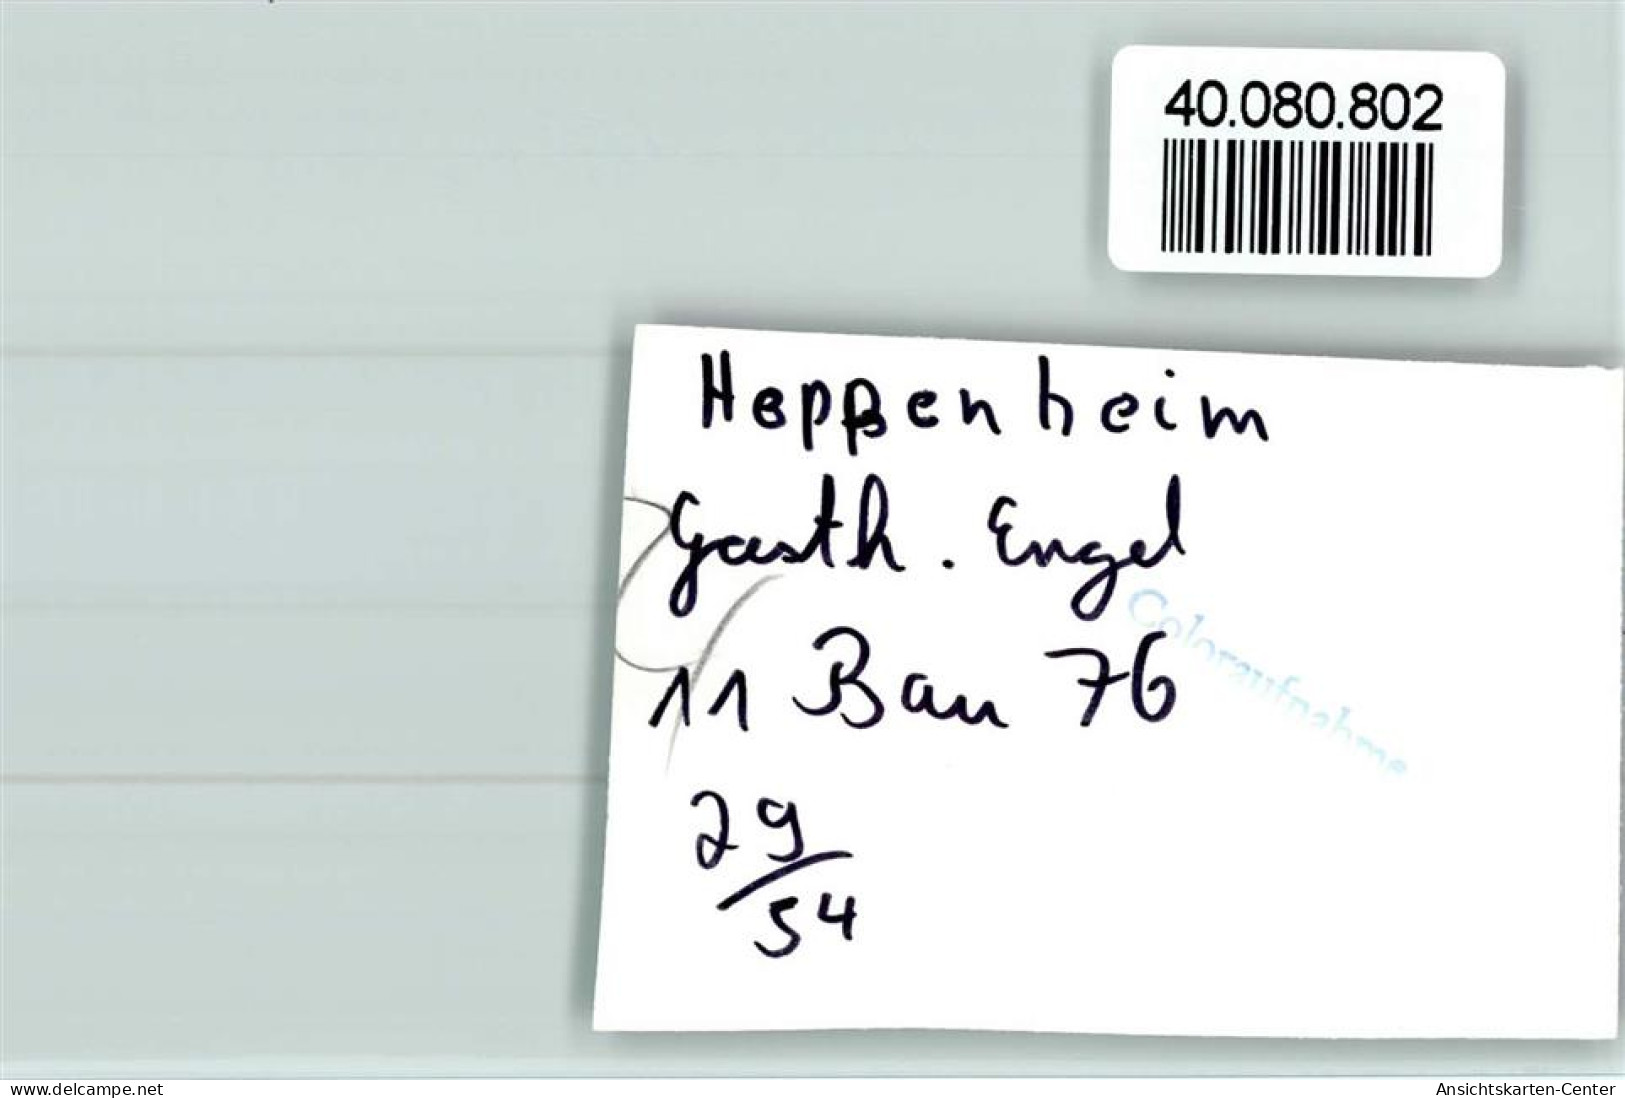 40080802 - Heppenheim (Bergstrasse) - Heppenheim